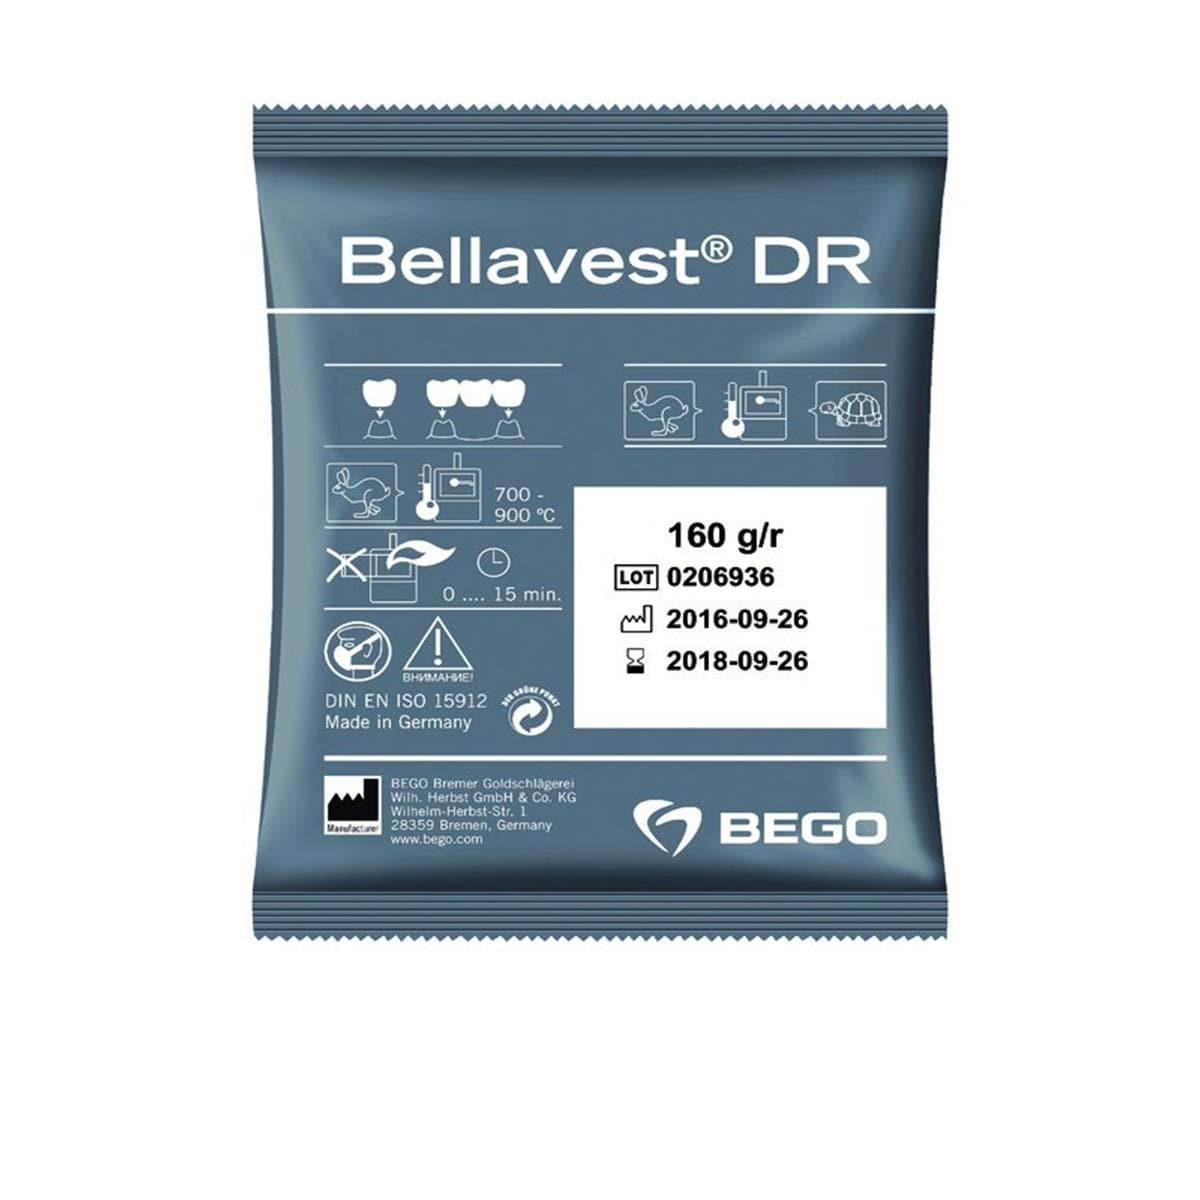 Bellavest DR BEGO - Le carton de 12,8 kg (80 x 160 g)